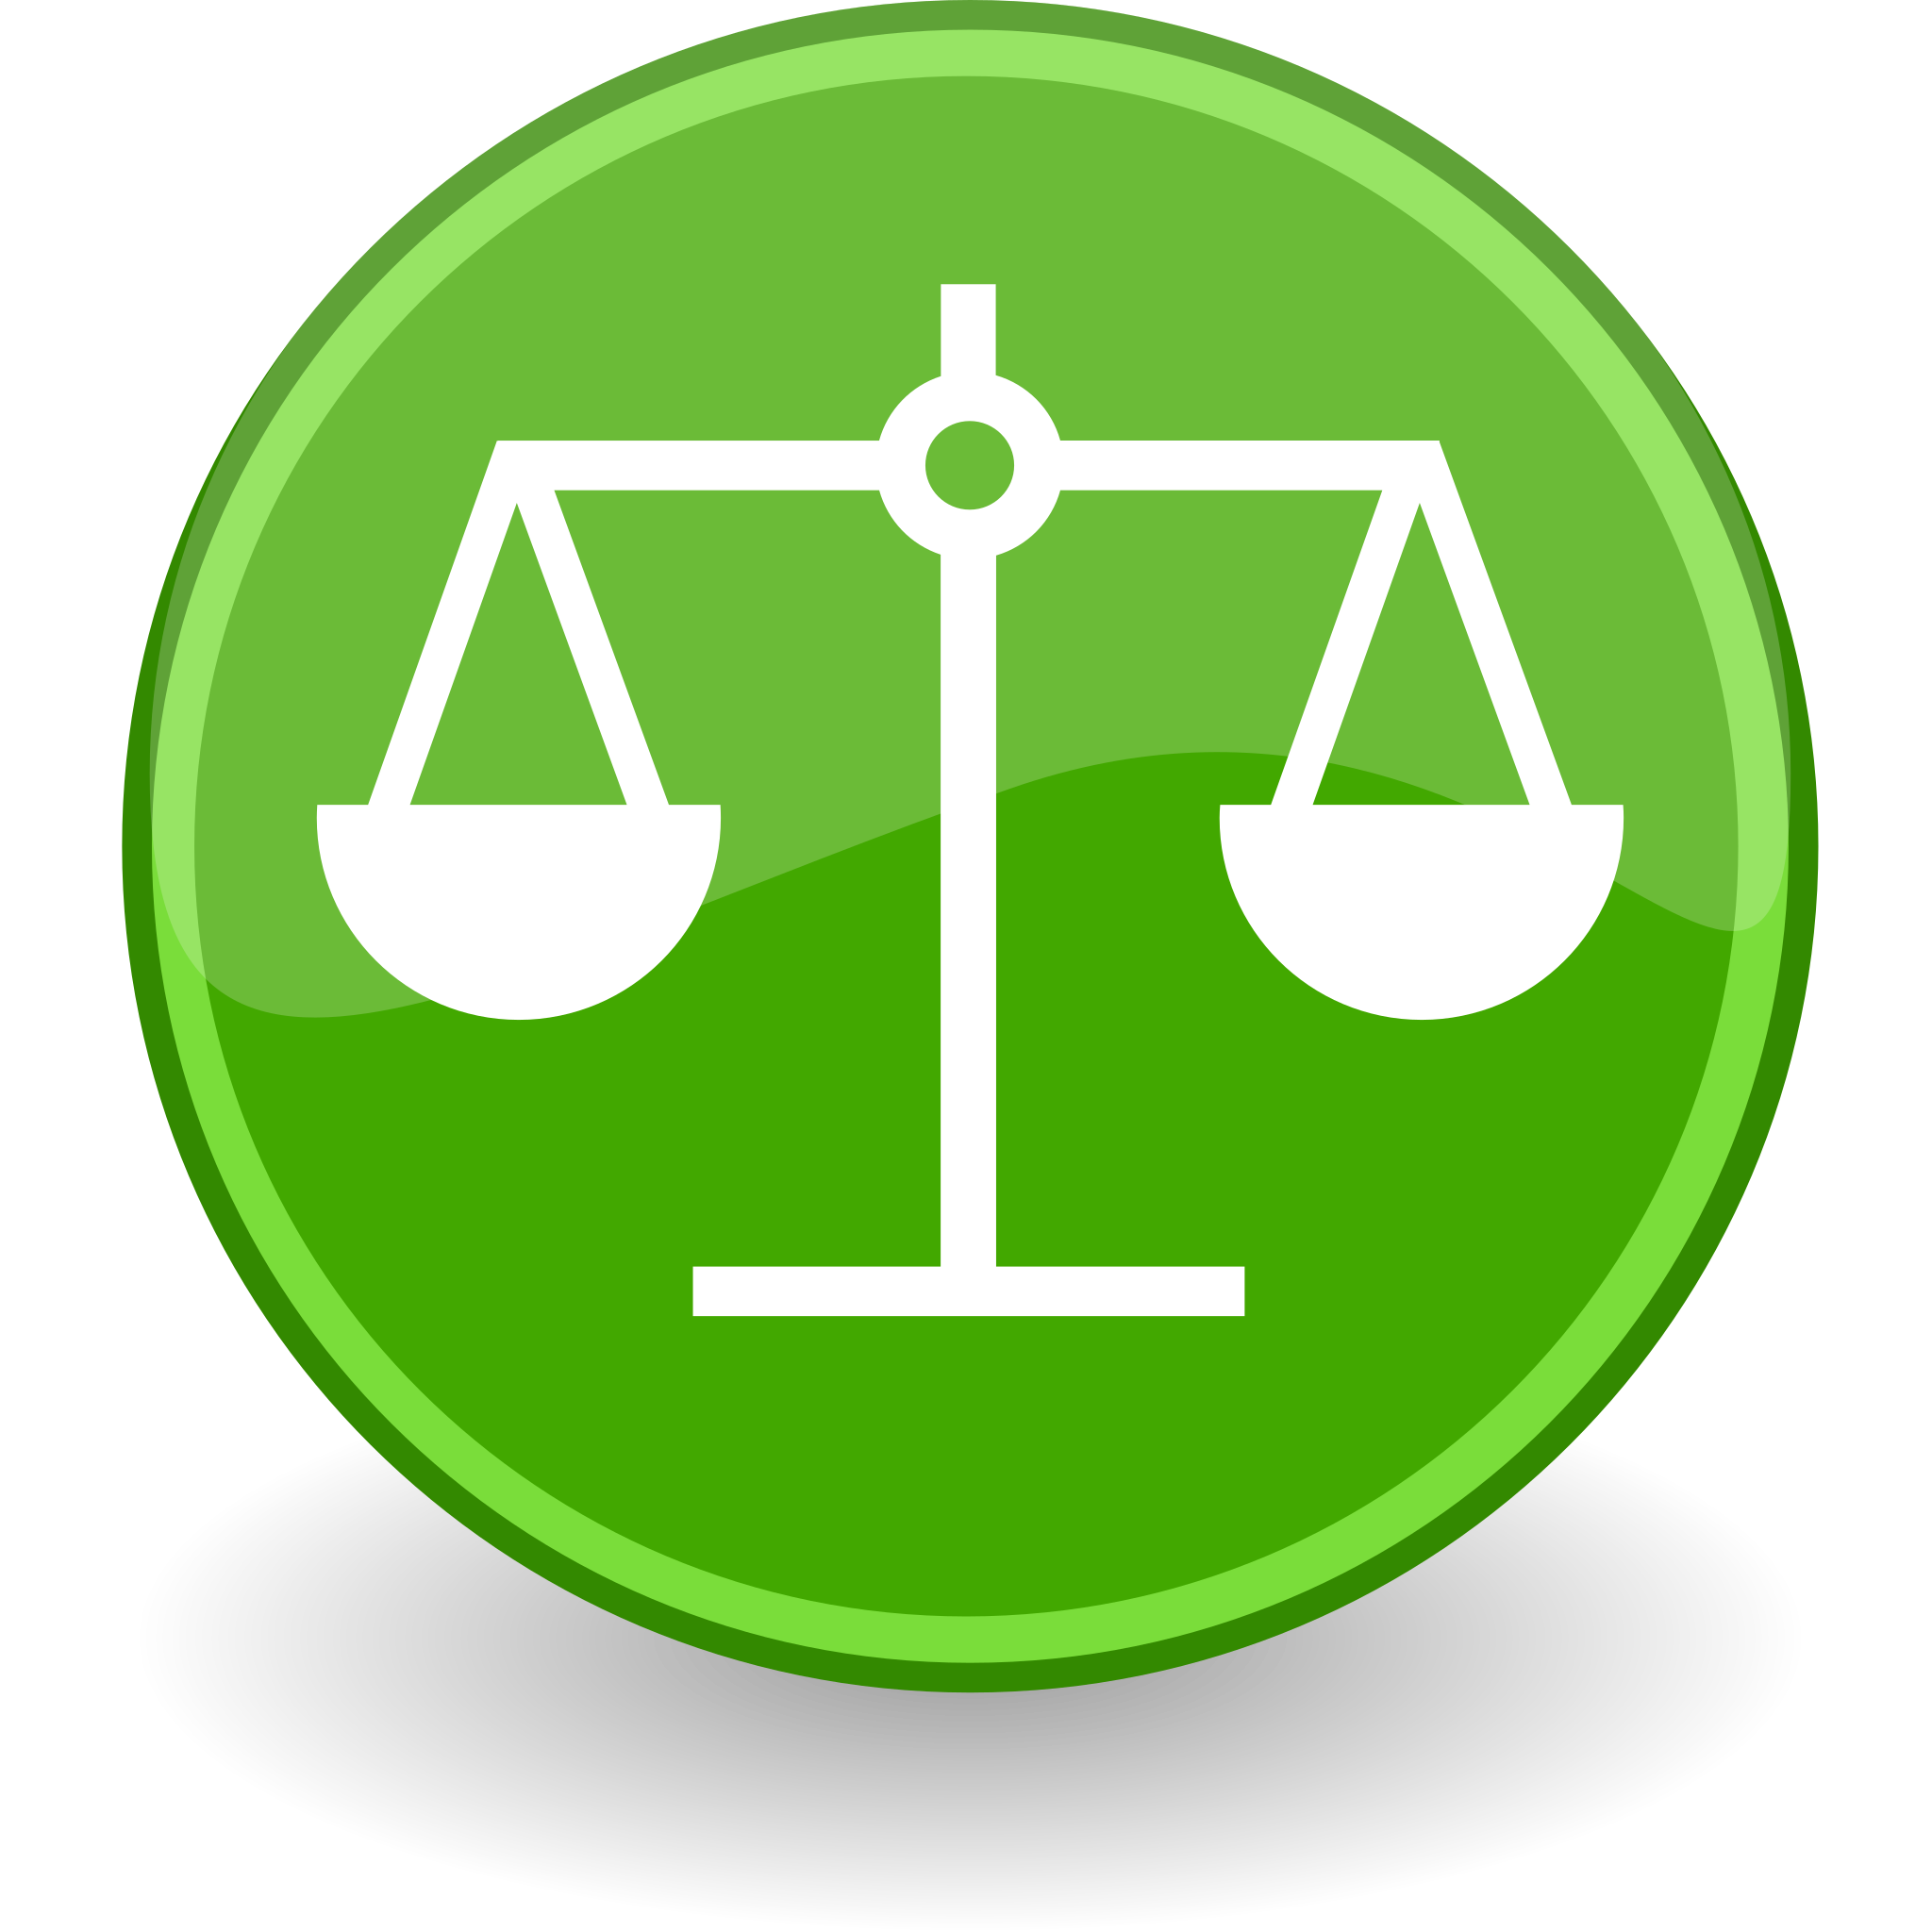 File:Balance scales symbol.svg - Wikimedia Commons